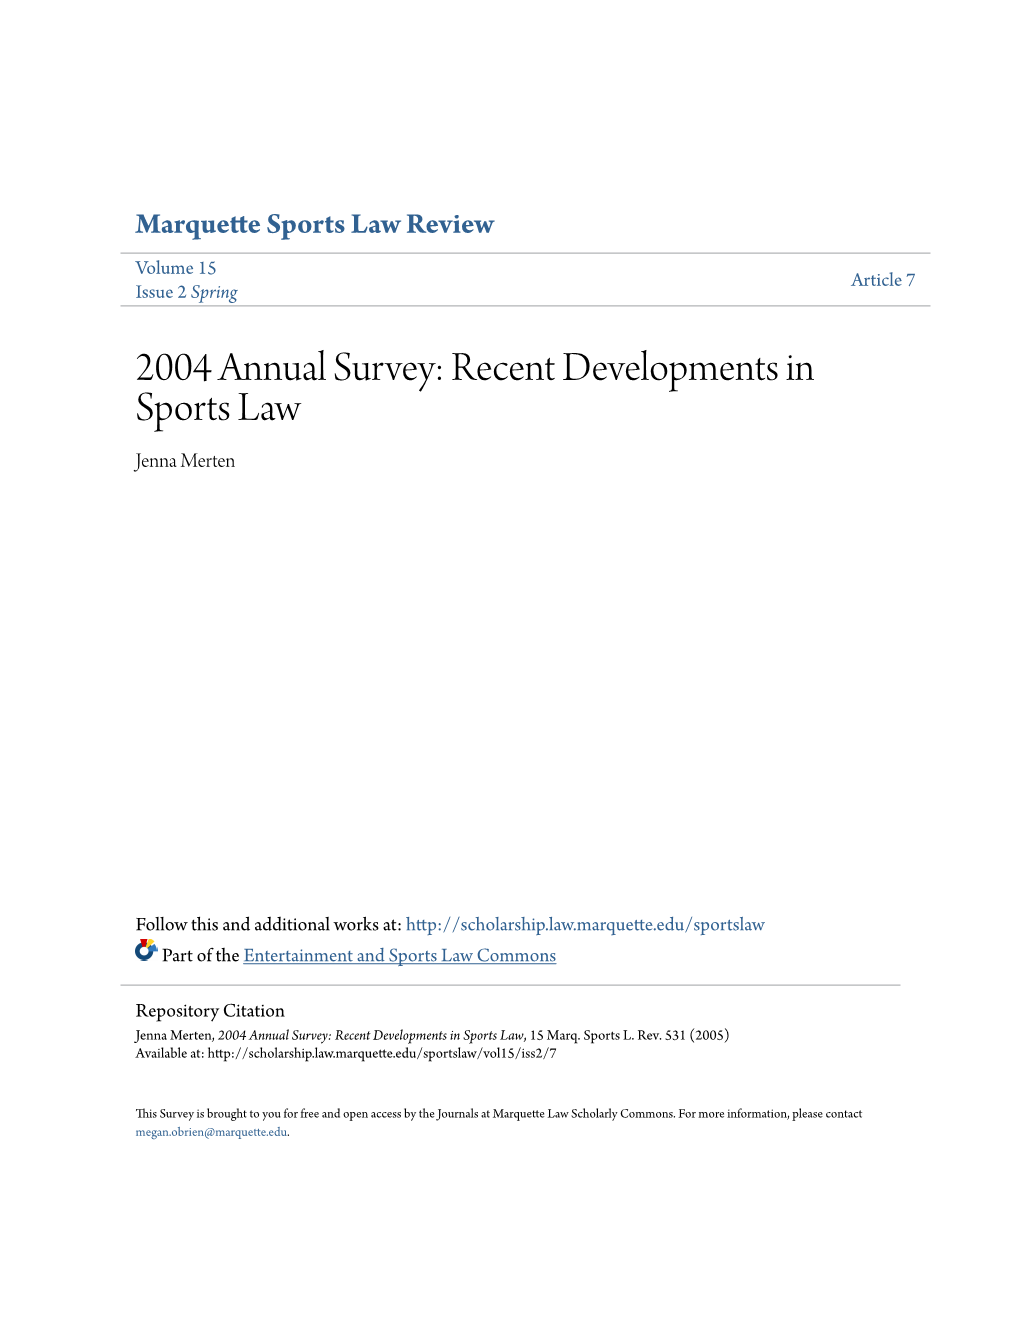 2004 Annual Survey: Recent Developments in Sports Law Jenna Merten